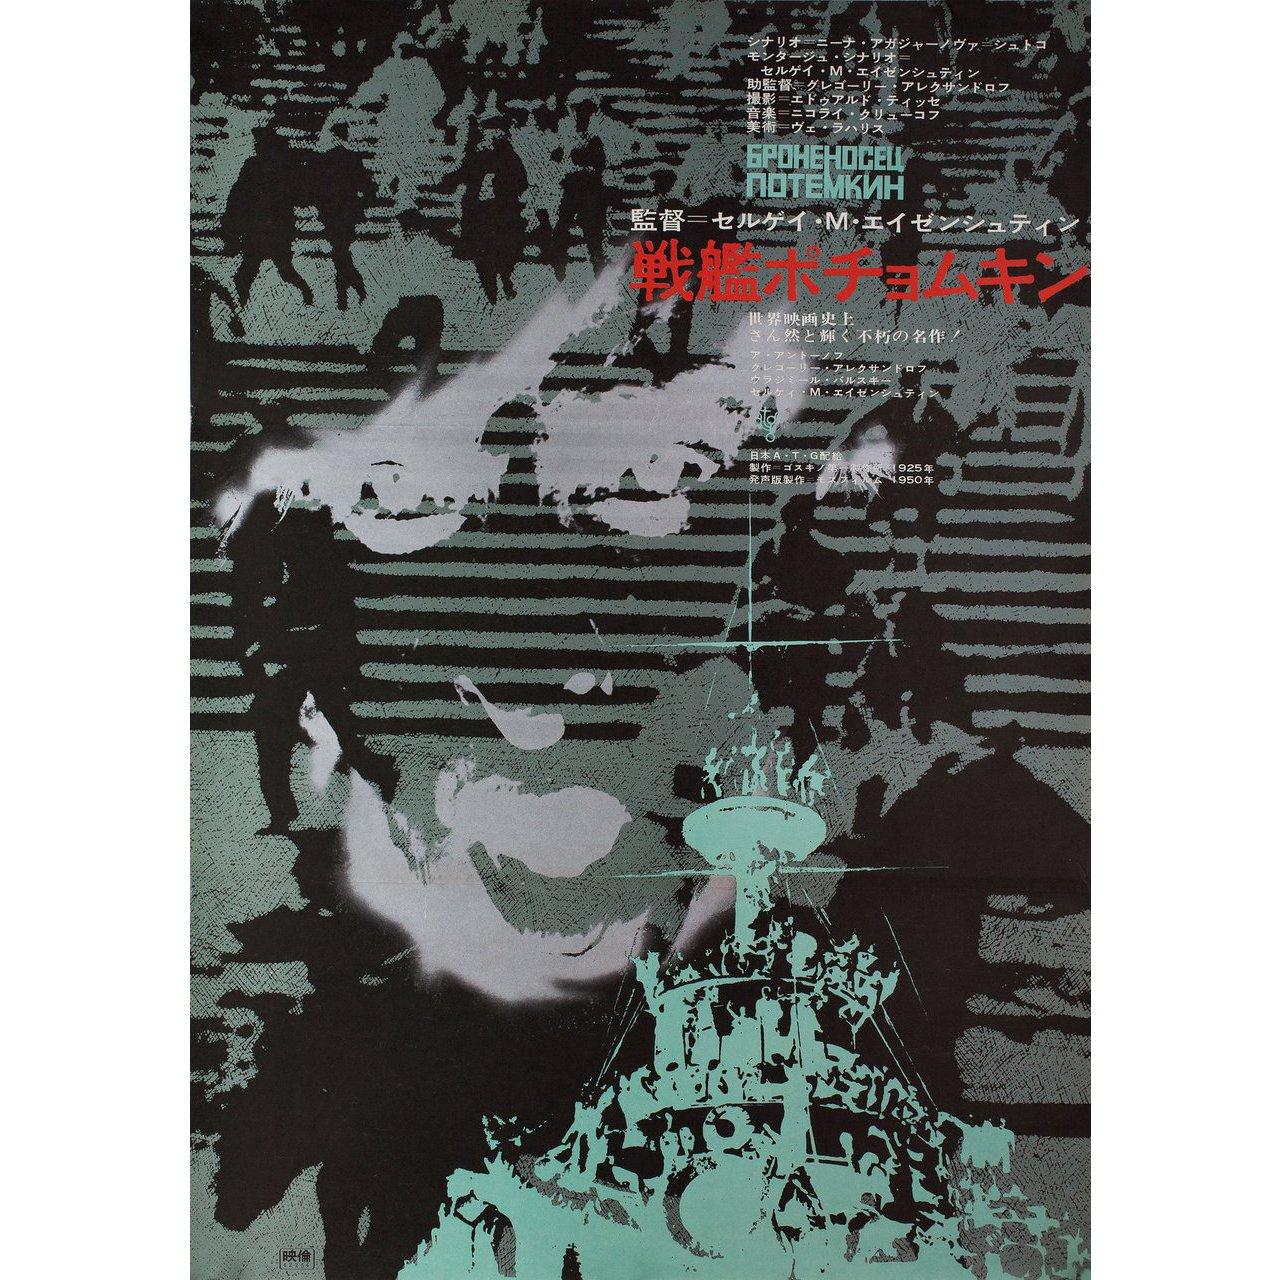 Original 1967 Japanese B2 poster for the first Japanese theatrical release of the 1925 film Battleship Potemkin (Bronenosets Potyomkin) directed by Sergei M. Eisenstein with Aleksandr Antonov / Vladimir Barsky / Grigori Aleksandrov / Ivan Bobrov.